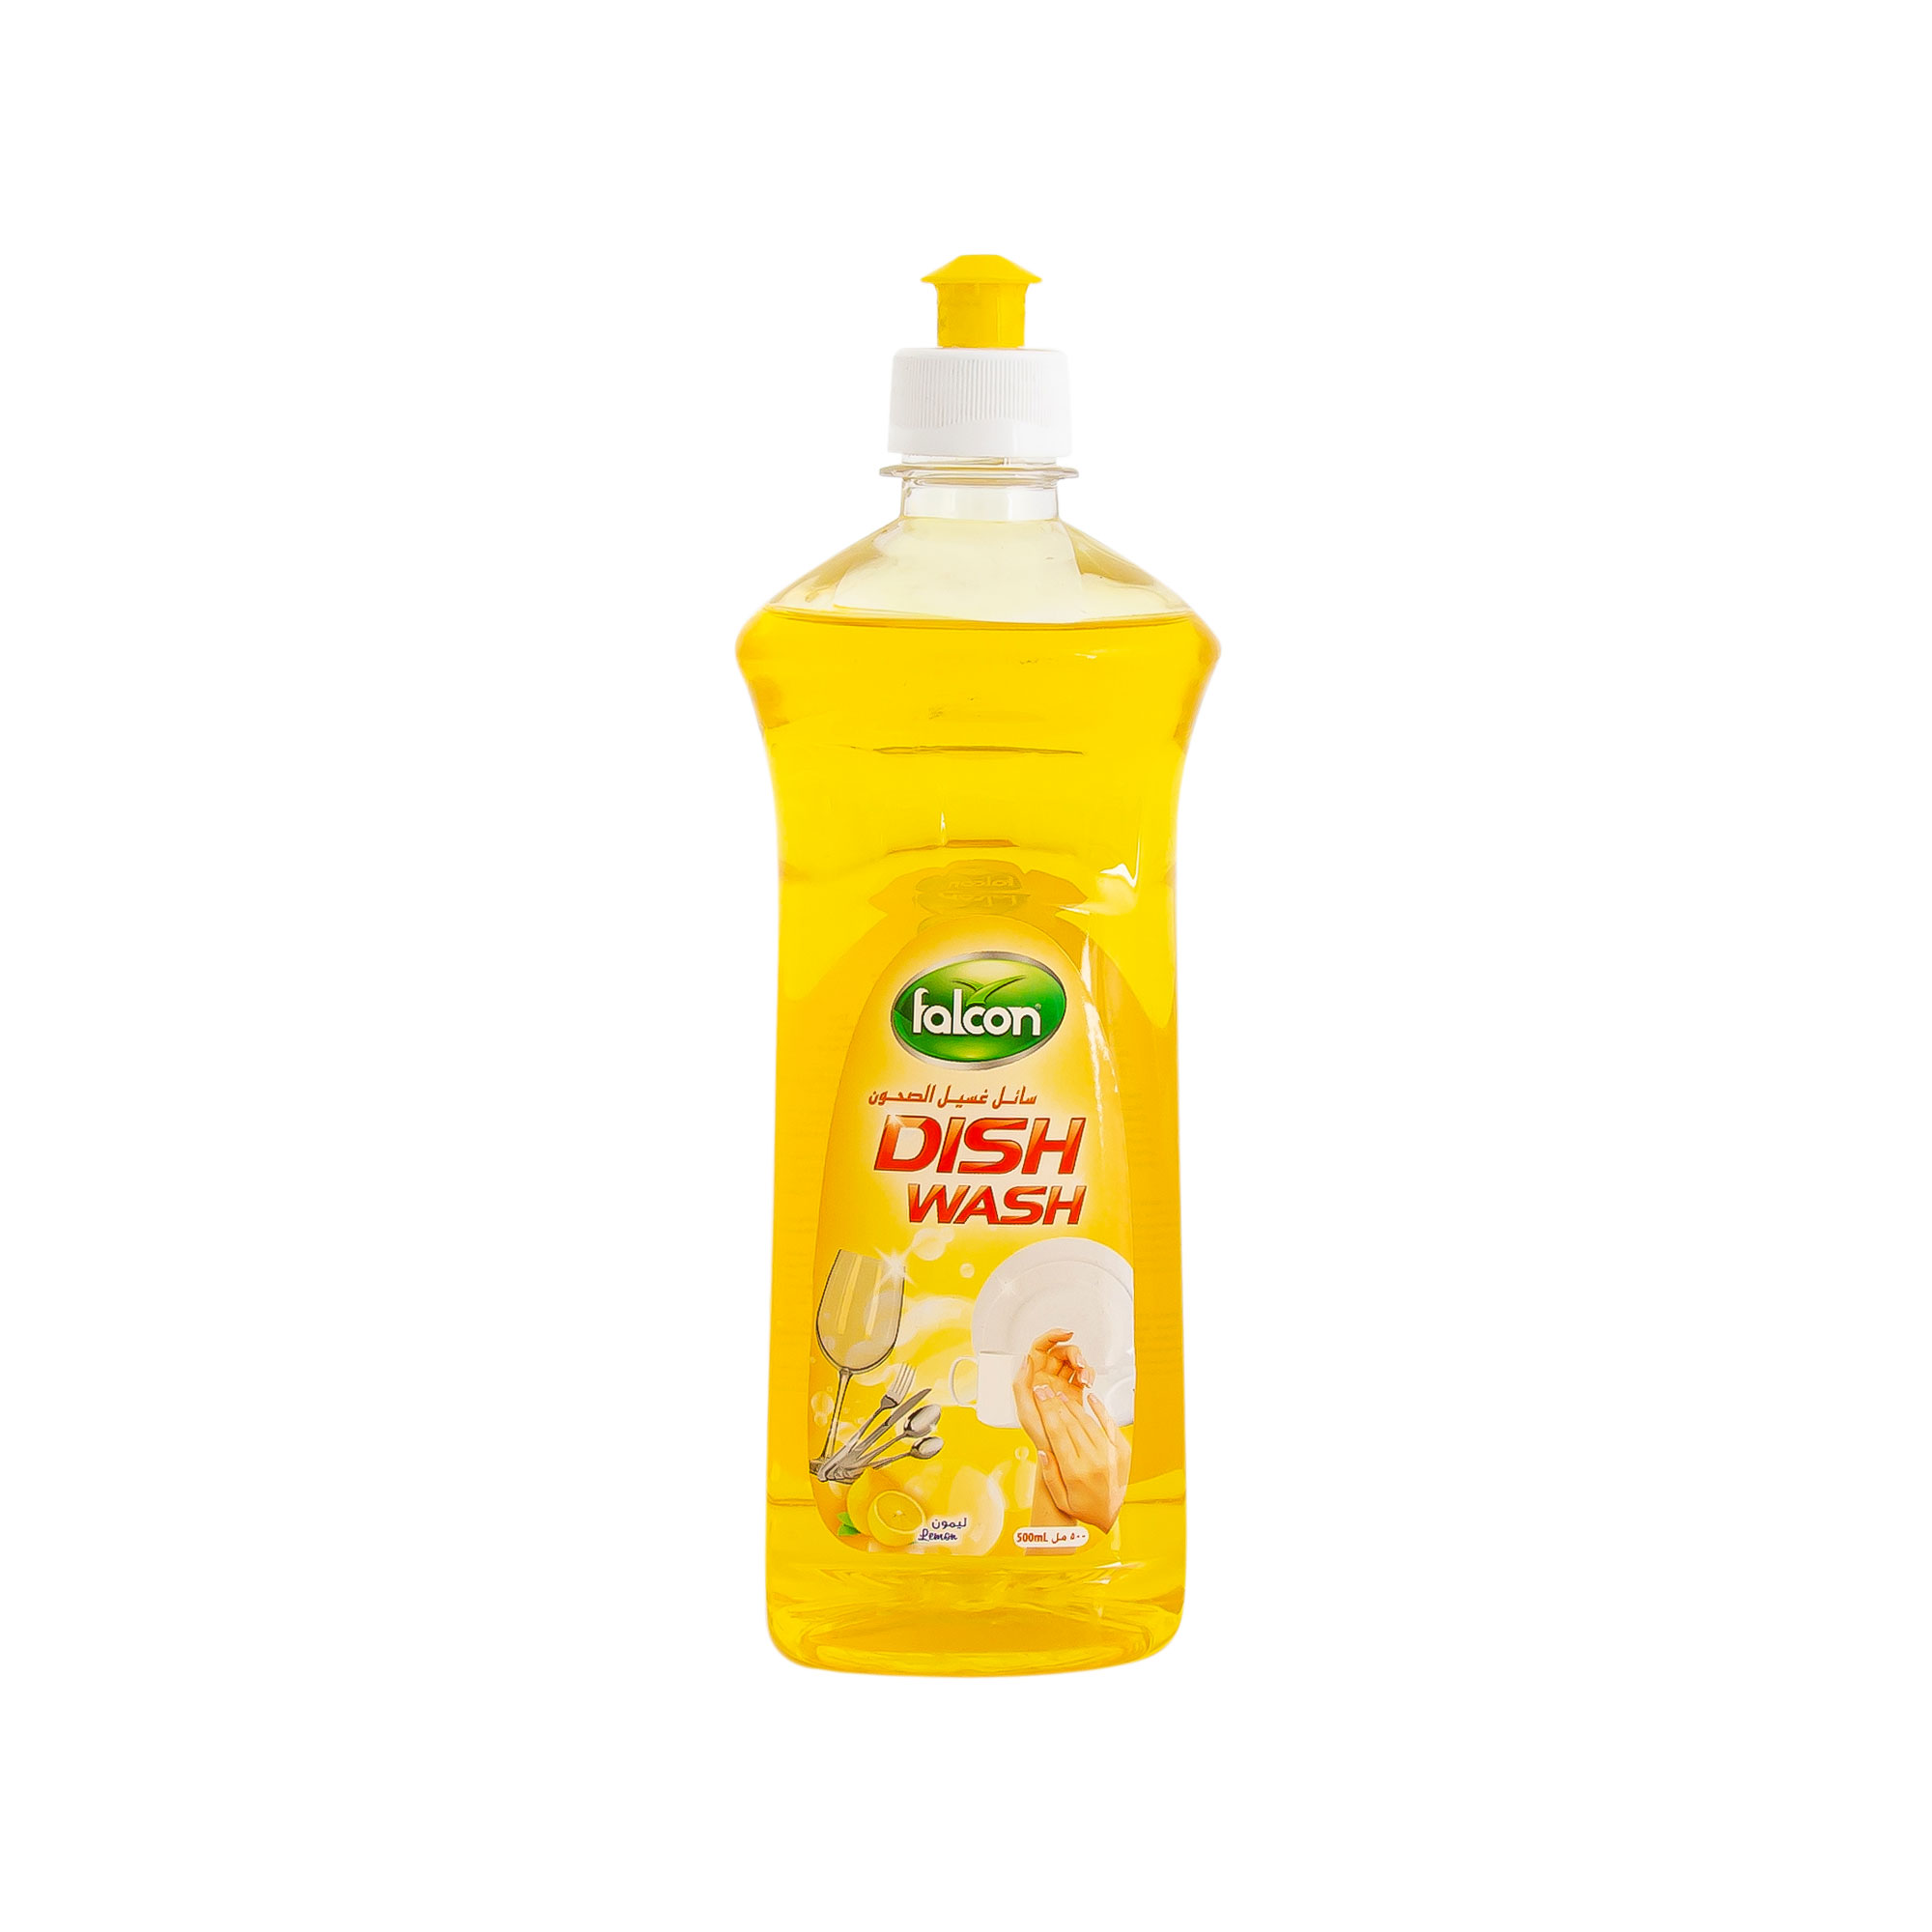 Falcon Dish Wash Liquid (Lemon, 500ml Bottle)